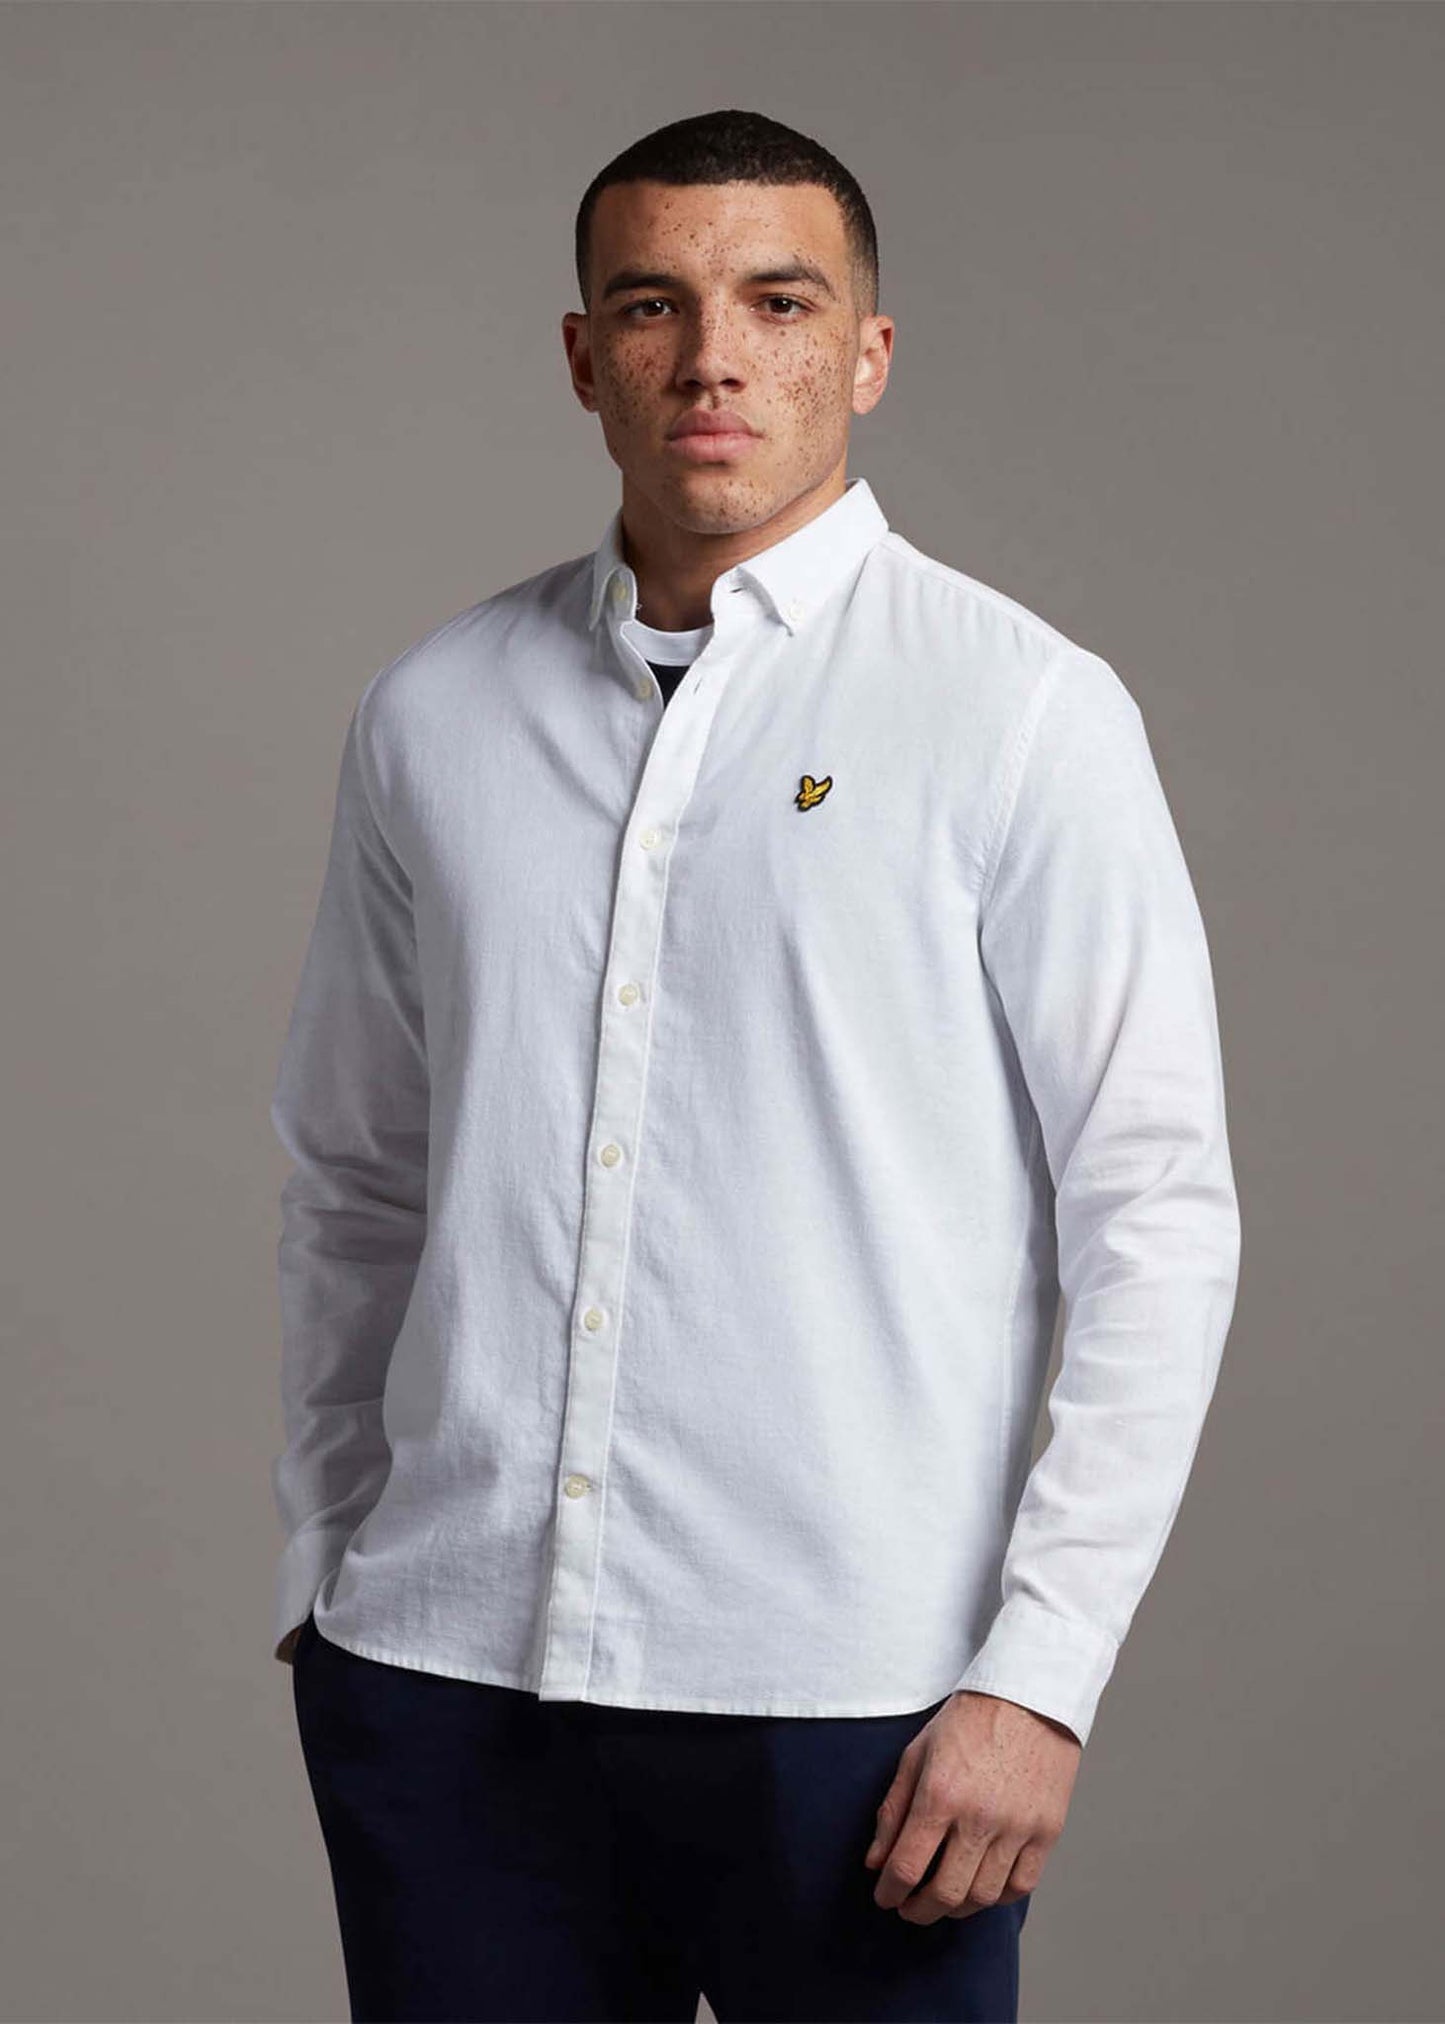 Lyle & Scott Overhemden  Cotton linen shirt - white 